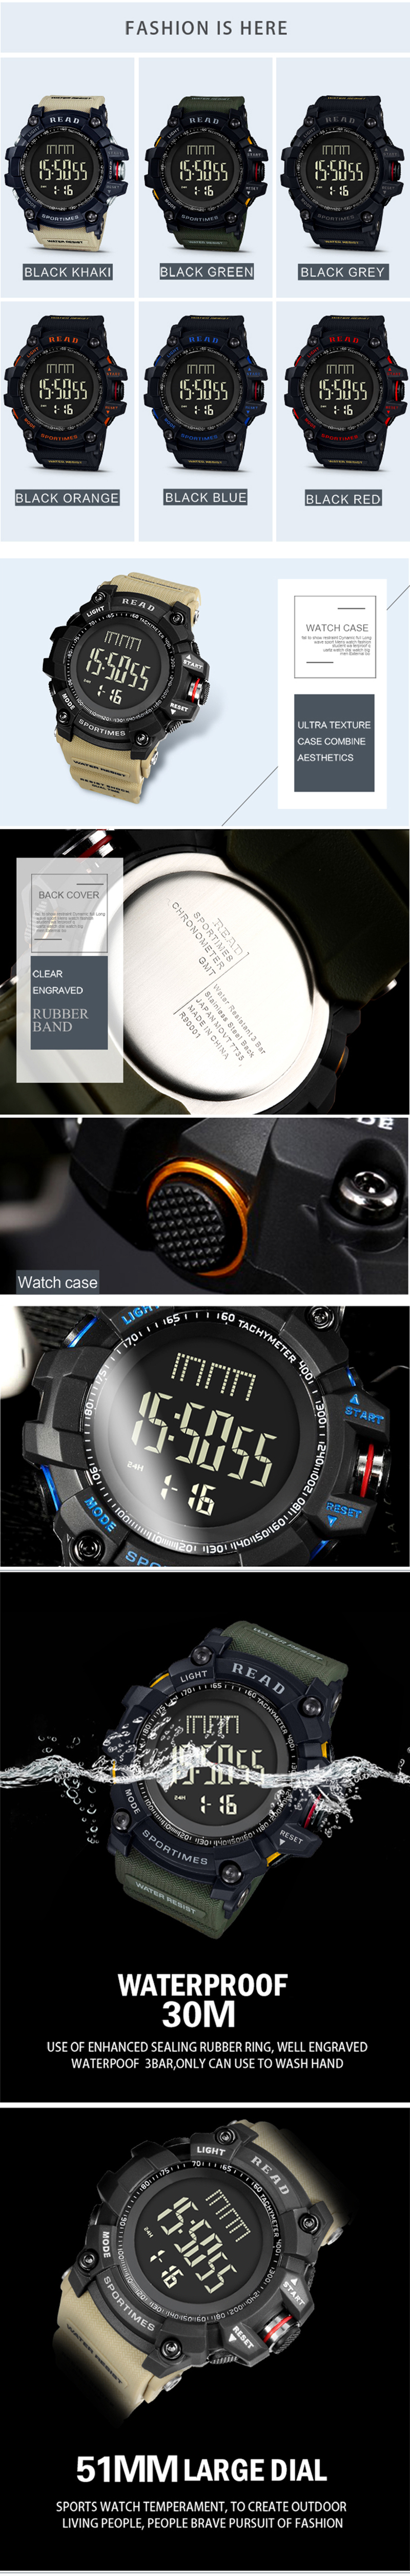 READ-R90002-Digital-Watch-Multifunction-Luminous-Display-Fashion-Stopwatch-Double-Time-Alarm-Watch-1307730